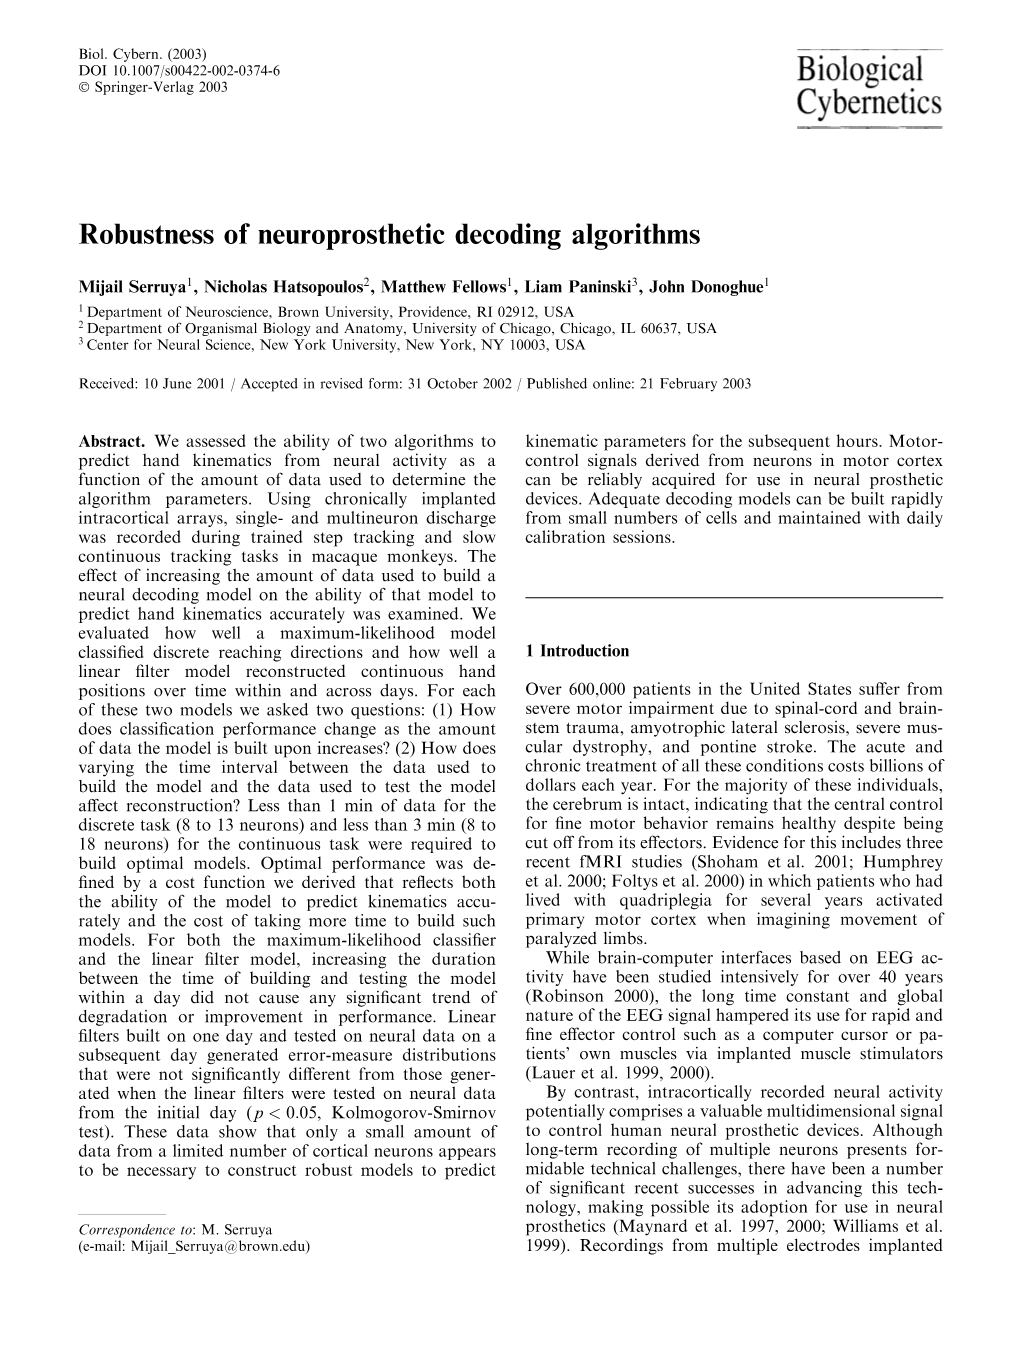 Robustness of Neuroprosthetic Decoding Algorithms